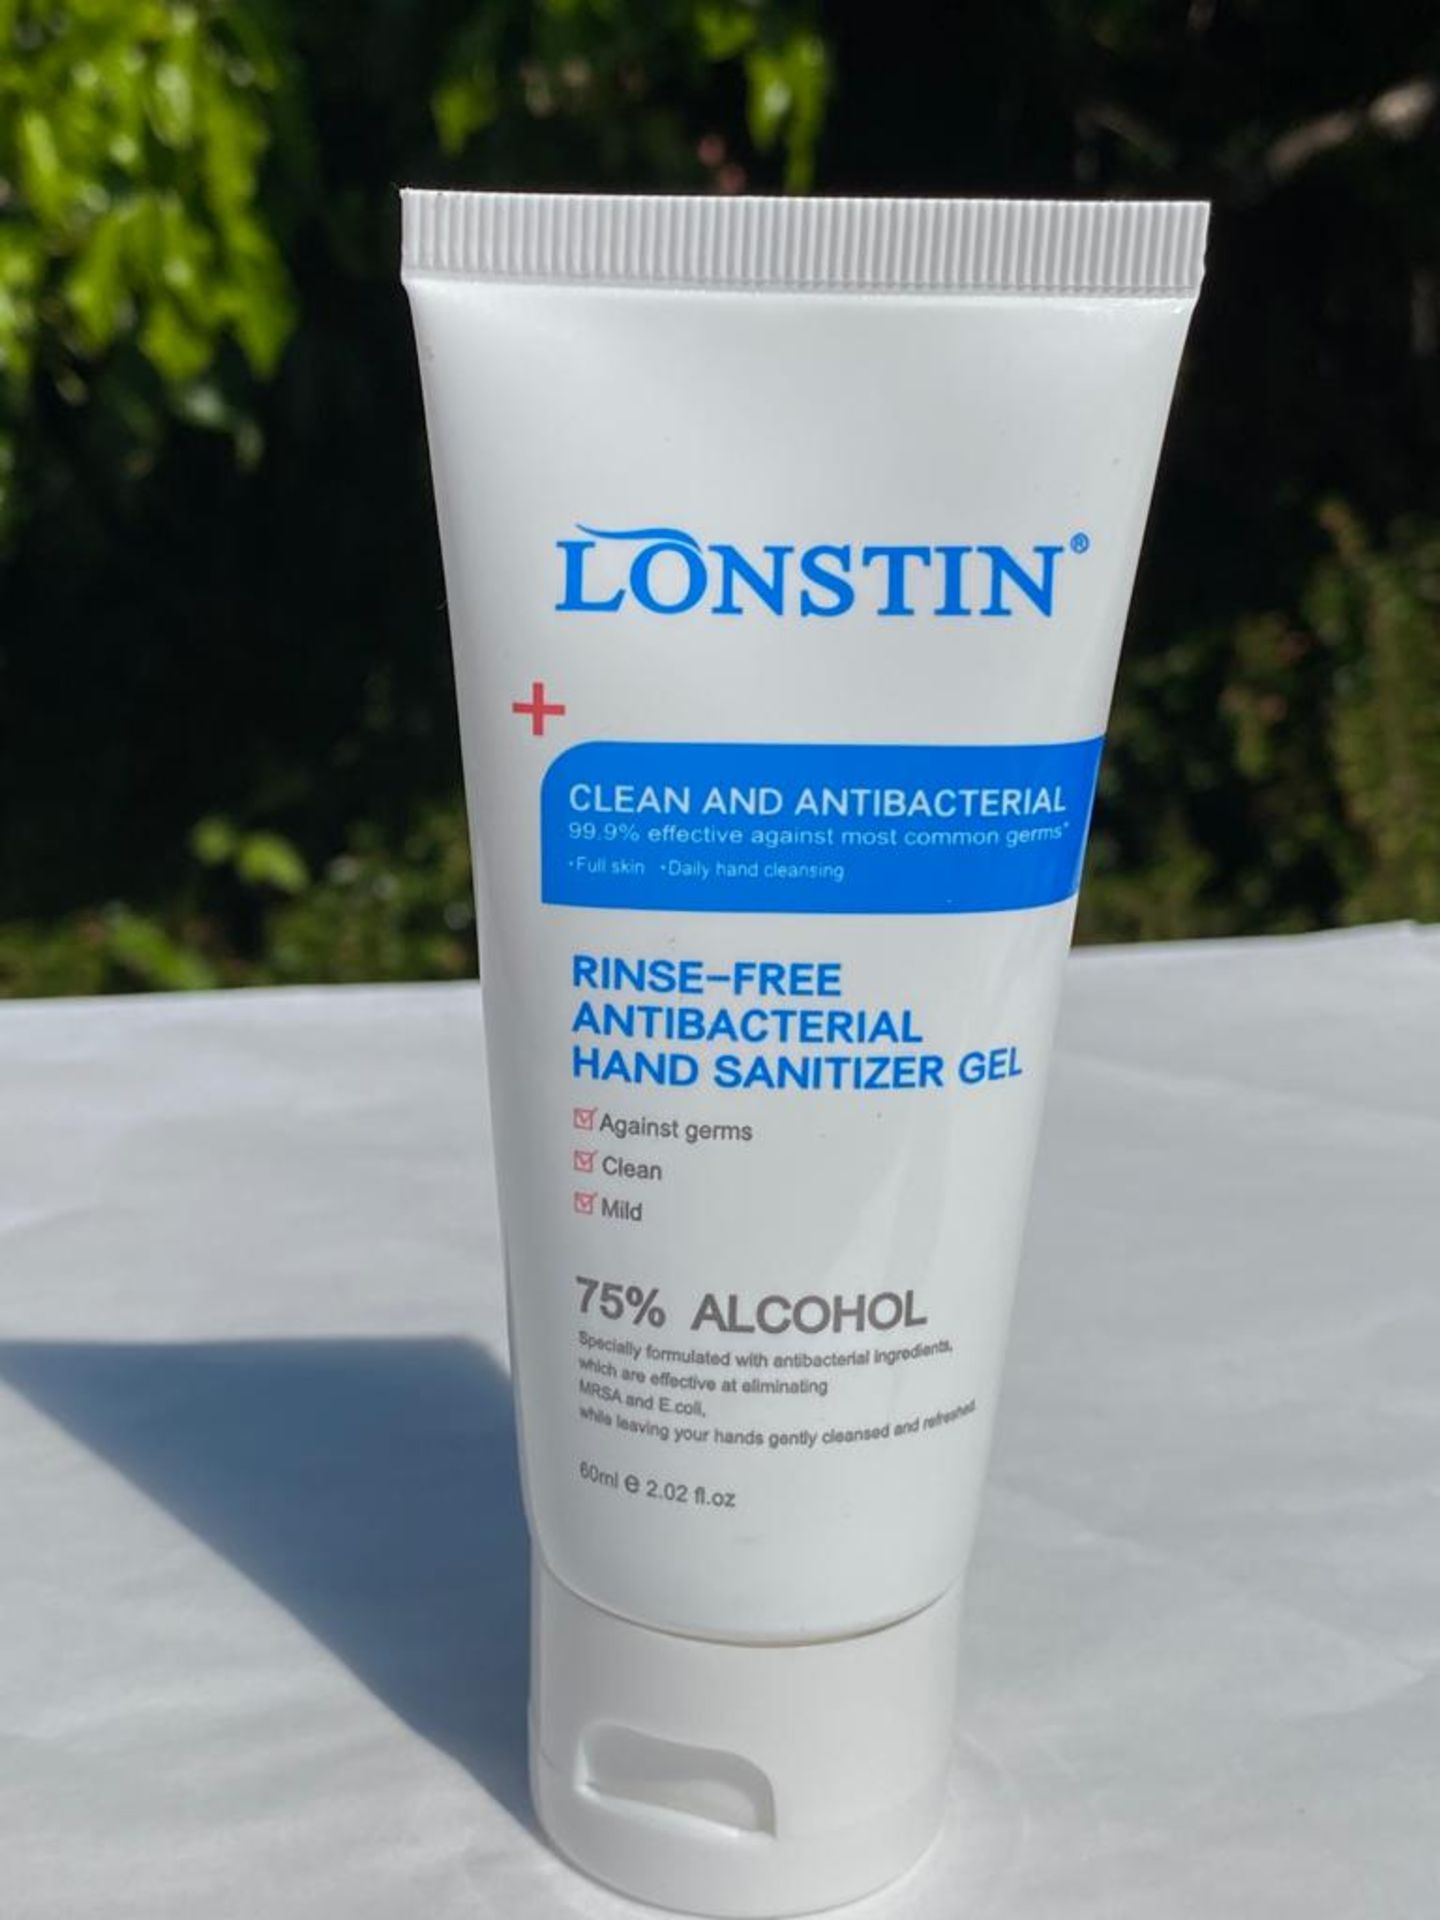 Lonstin Rinse-Free Antibacterial Hand Sanitiser Gel, 75% Alcohol. x1 box containing 200 units per